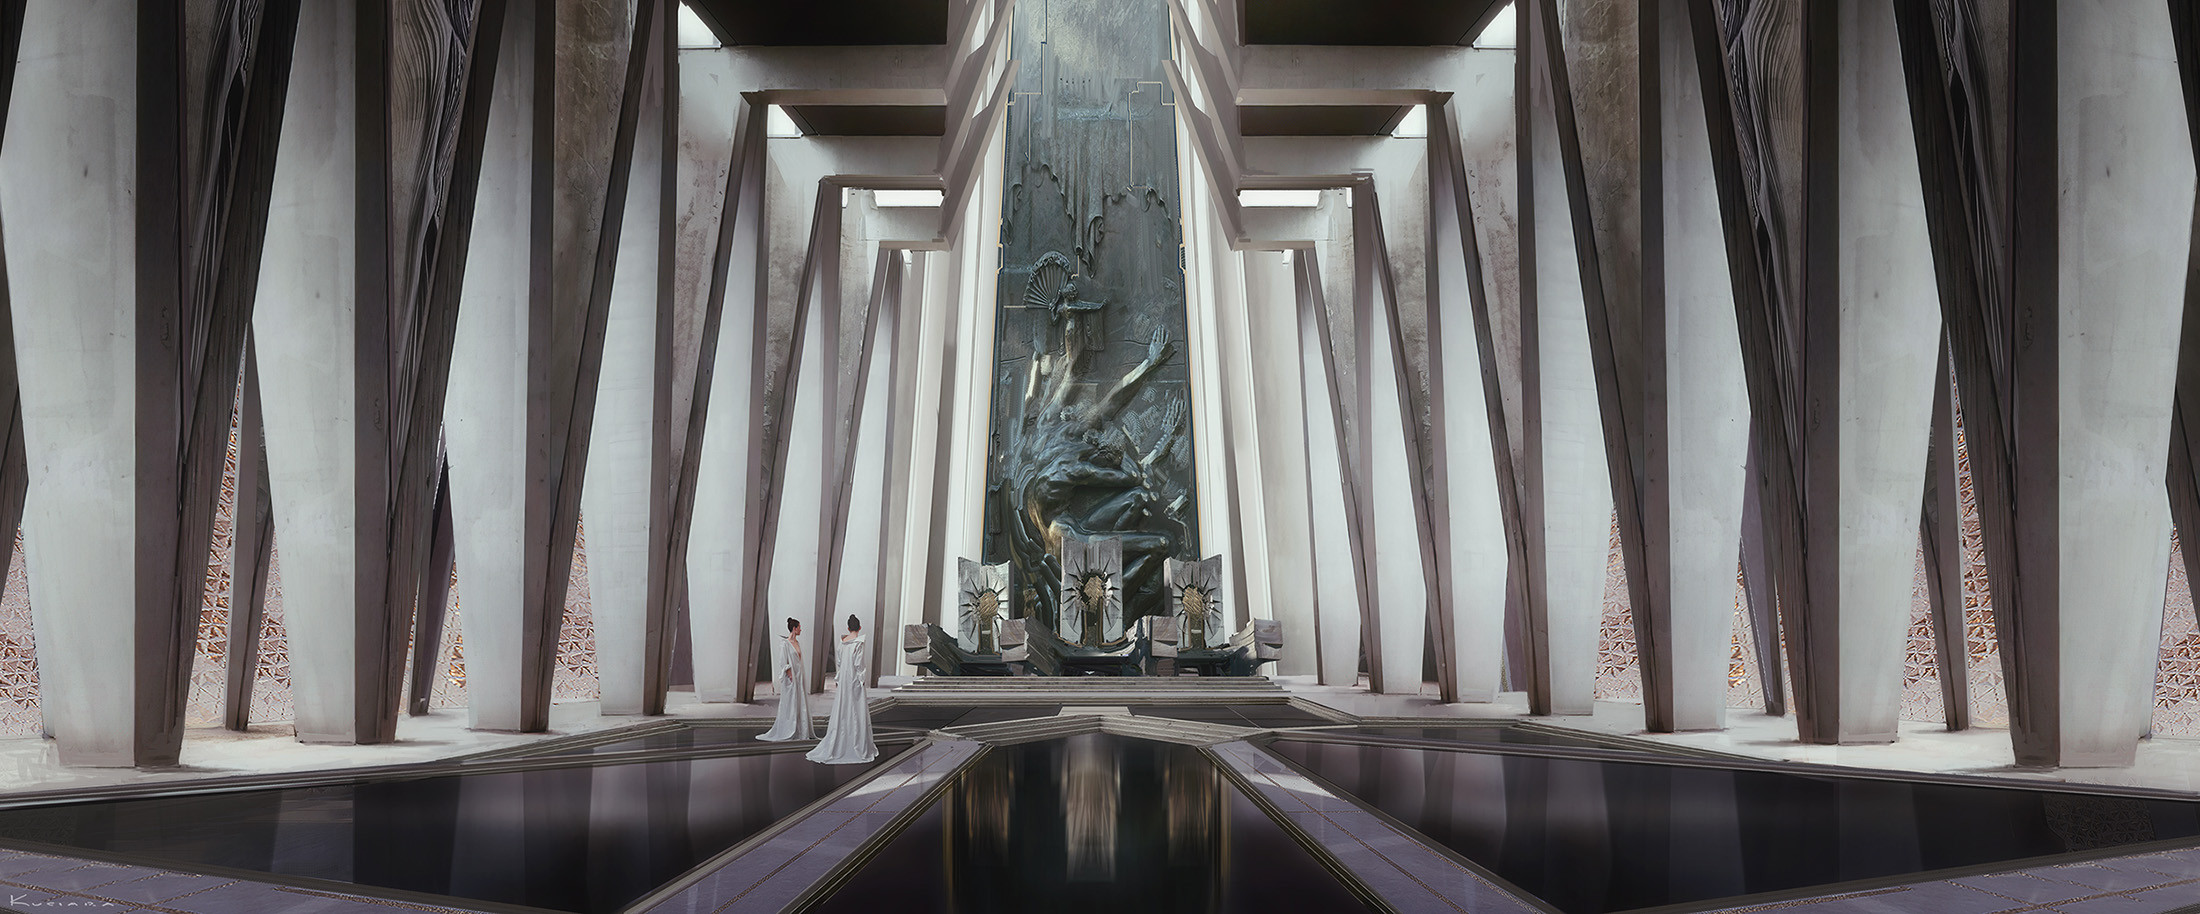 General 2200x914 artwork digital art white Throne Room throne